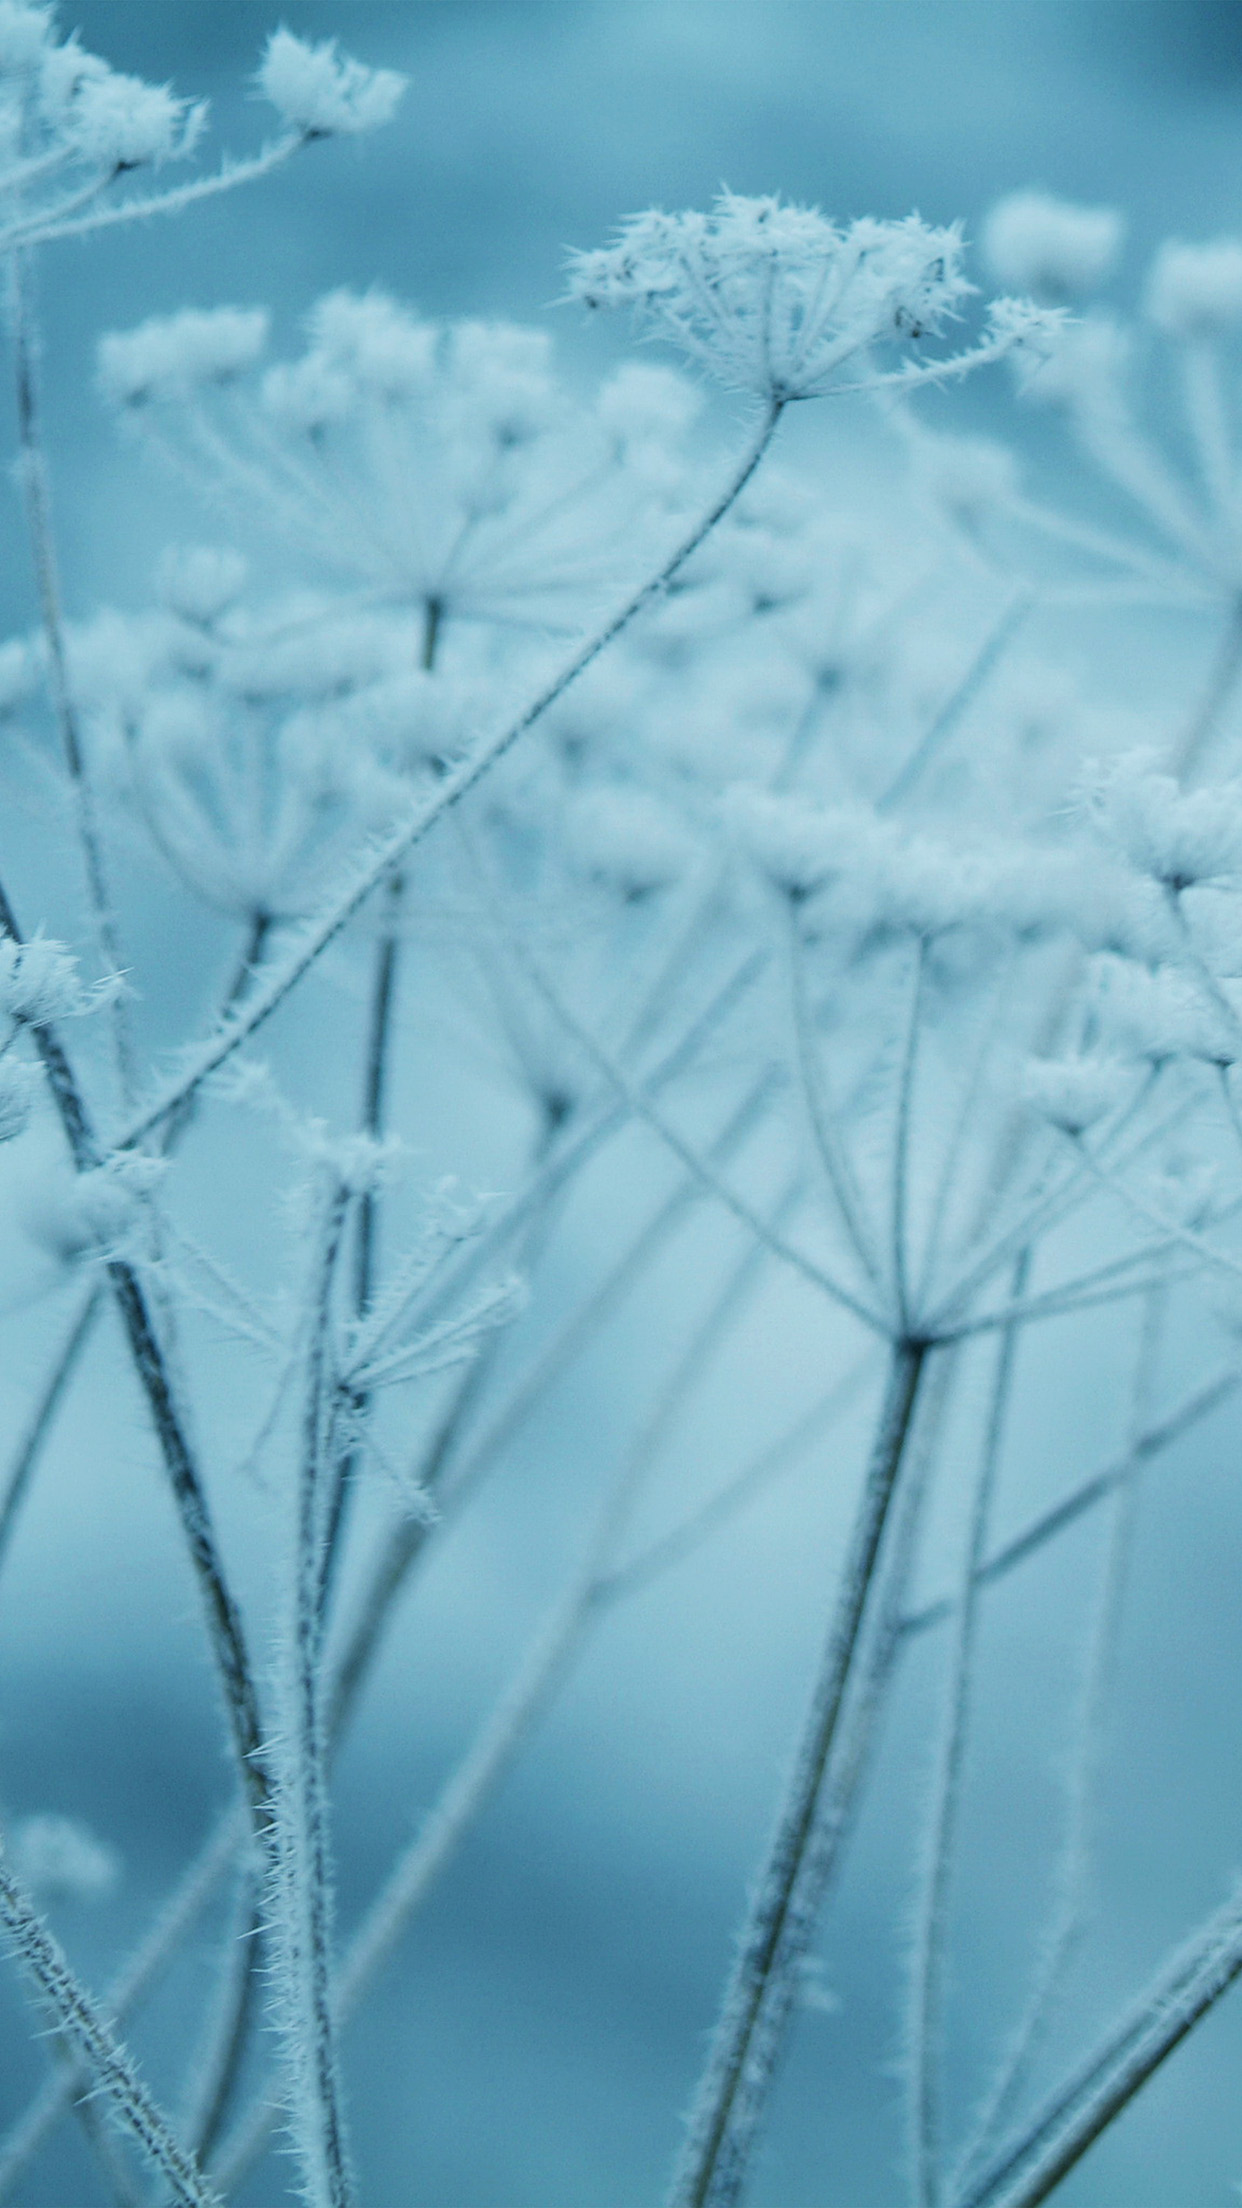 iPhone X wallpaper. ipad snow winter flower blue nature bokeh